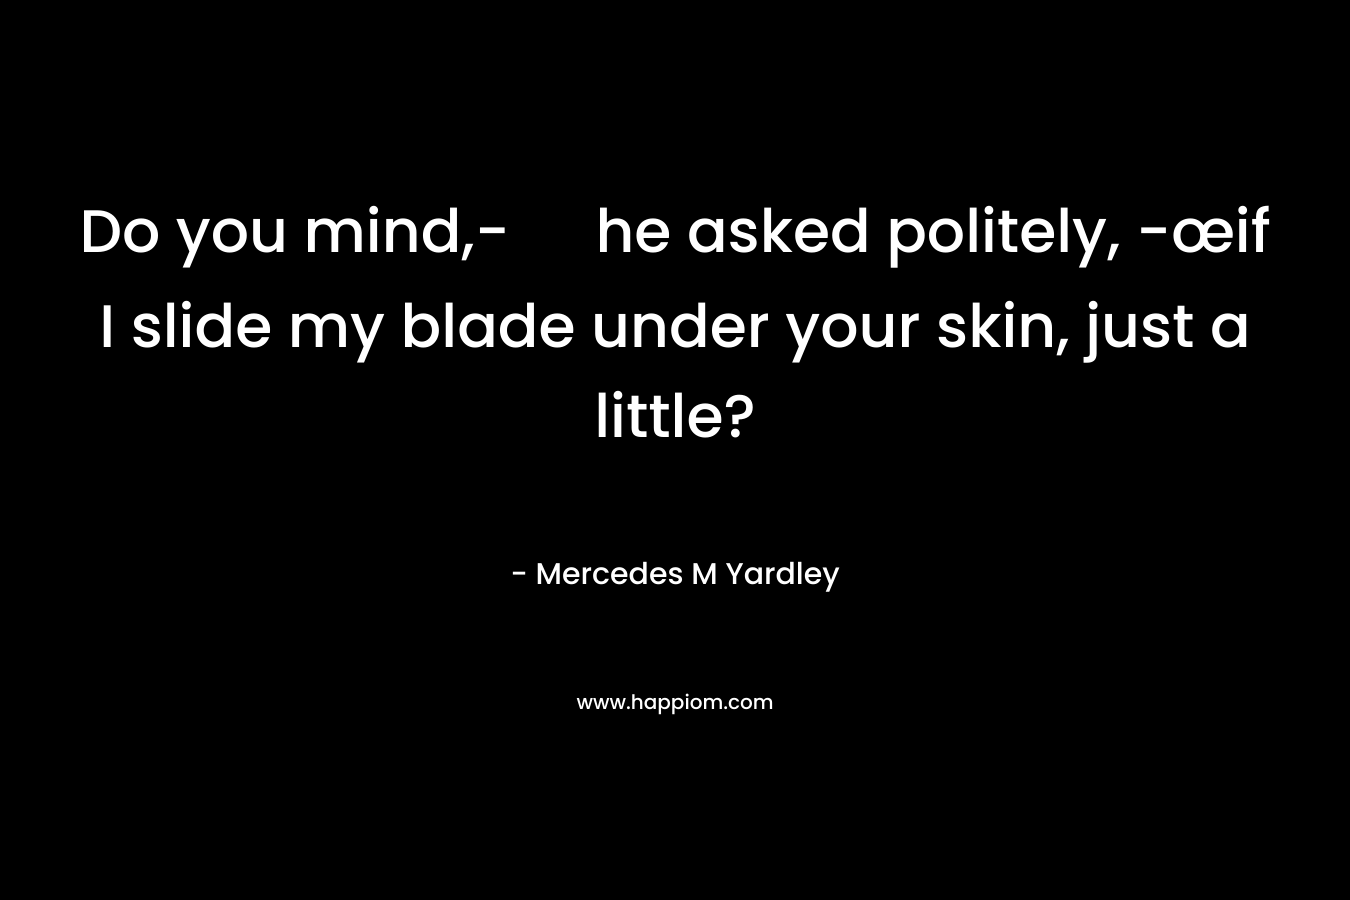 Do you mind,- he asked politely, -œif I slide my blade under your skin, just a little? – Mercedes M Yardley